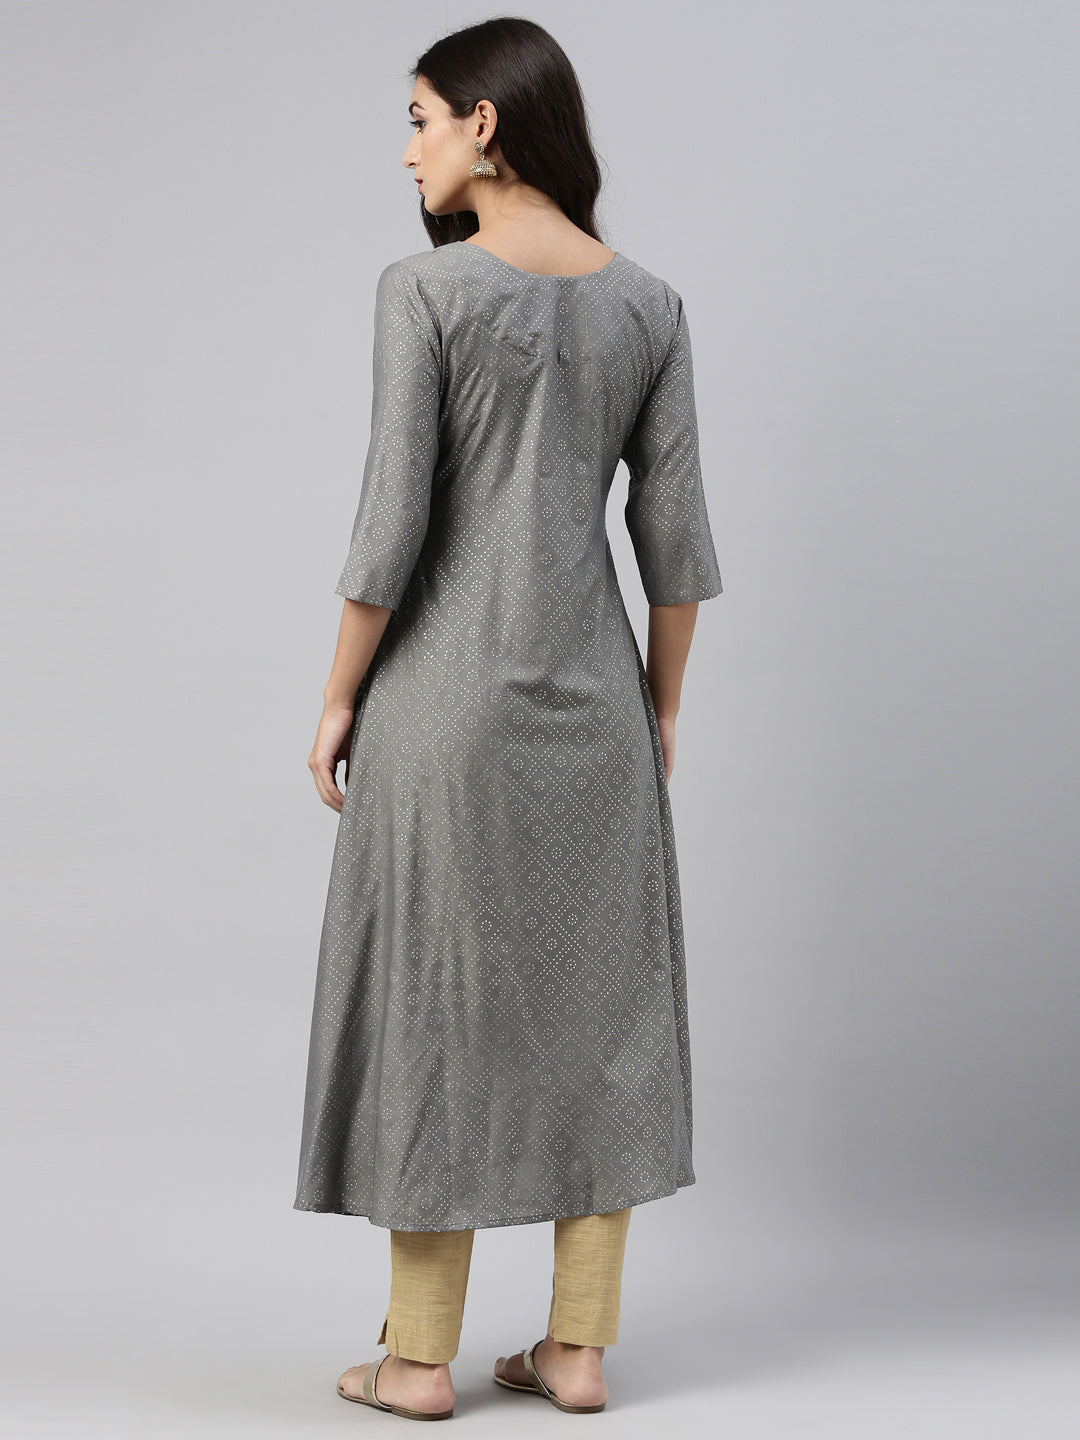 Neeru's Grey Color Muslin Fabric Tunic